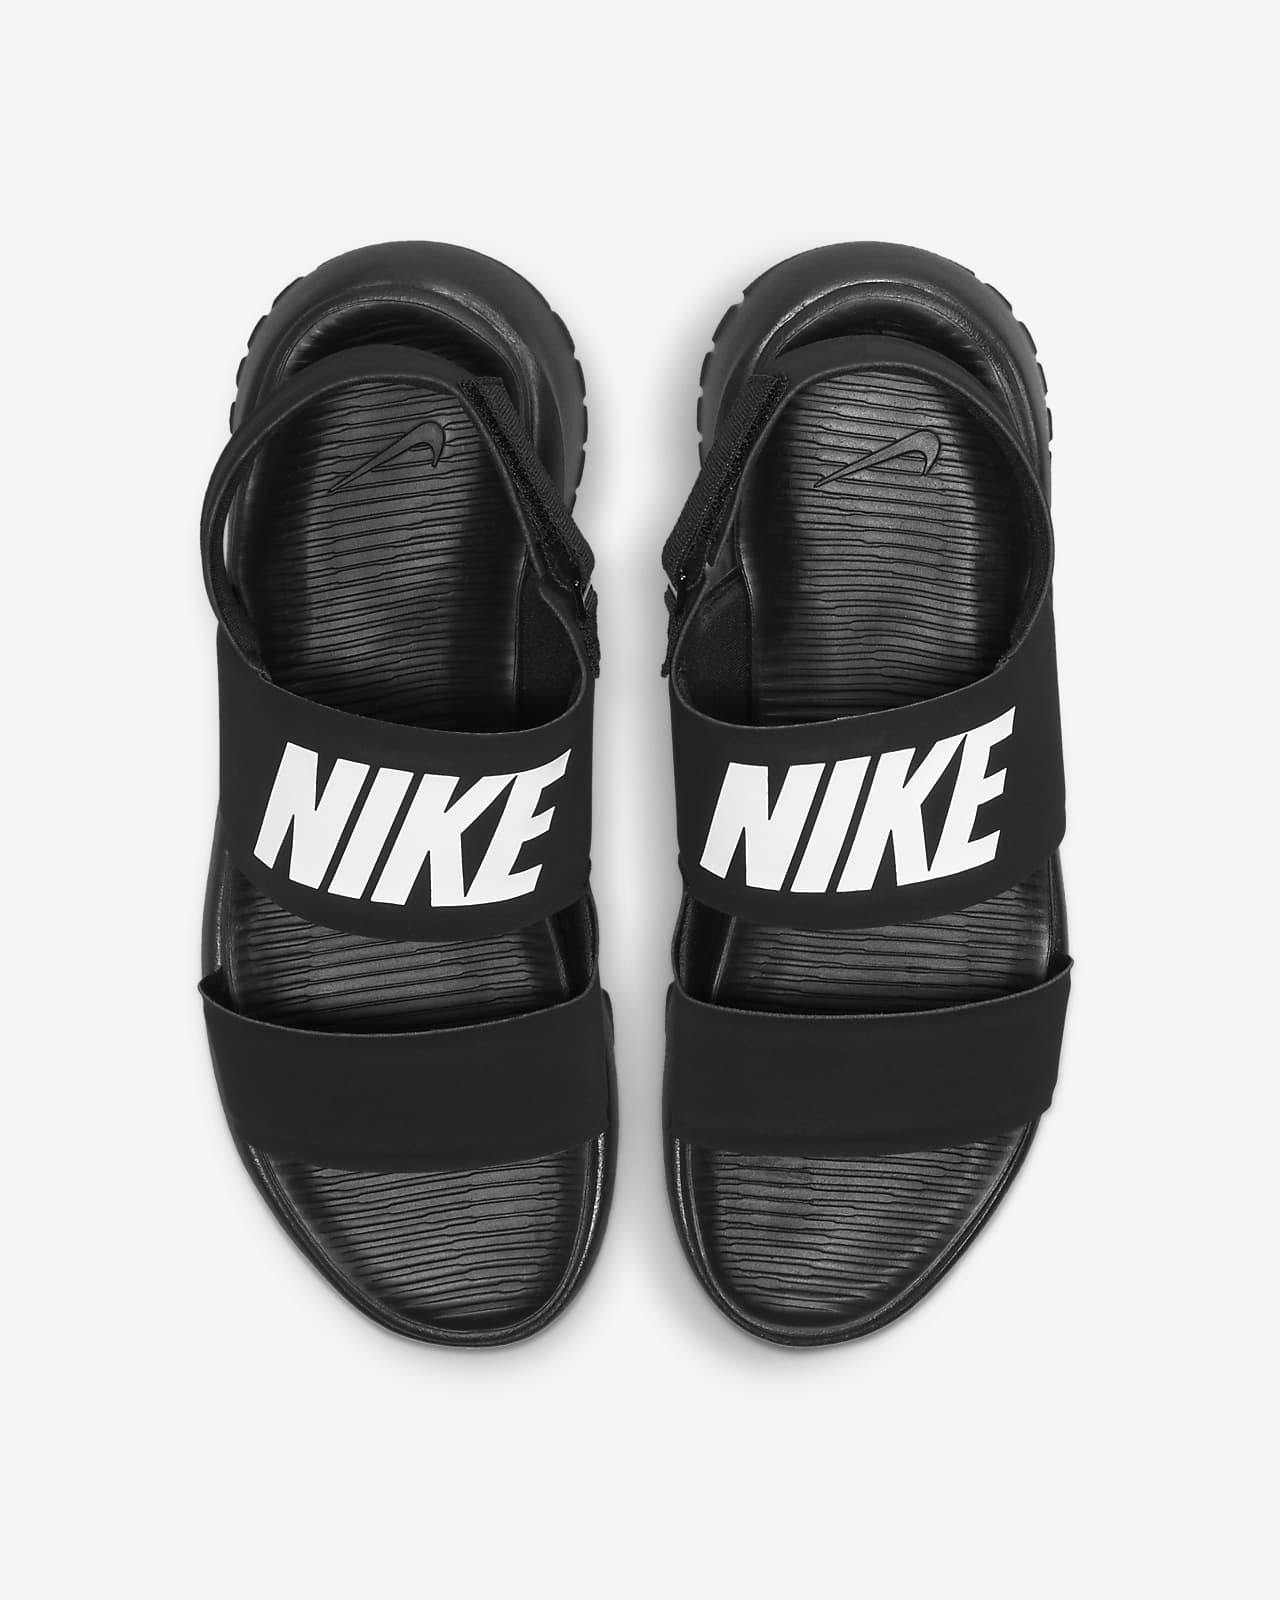 grey nike sandals tanjun